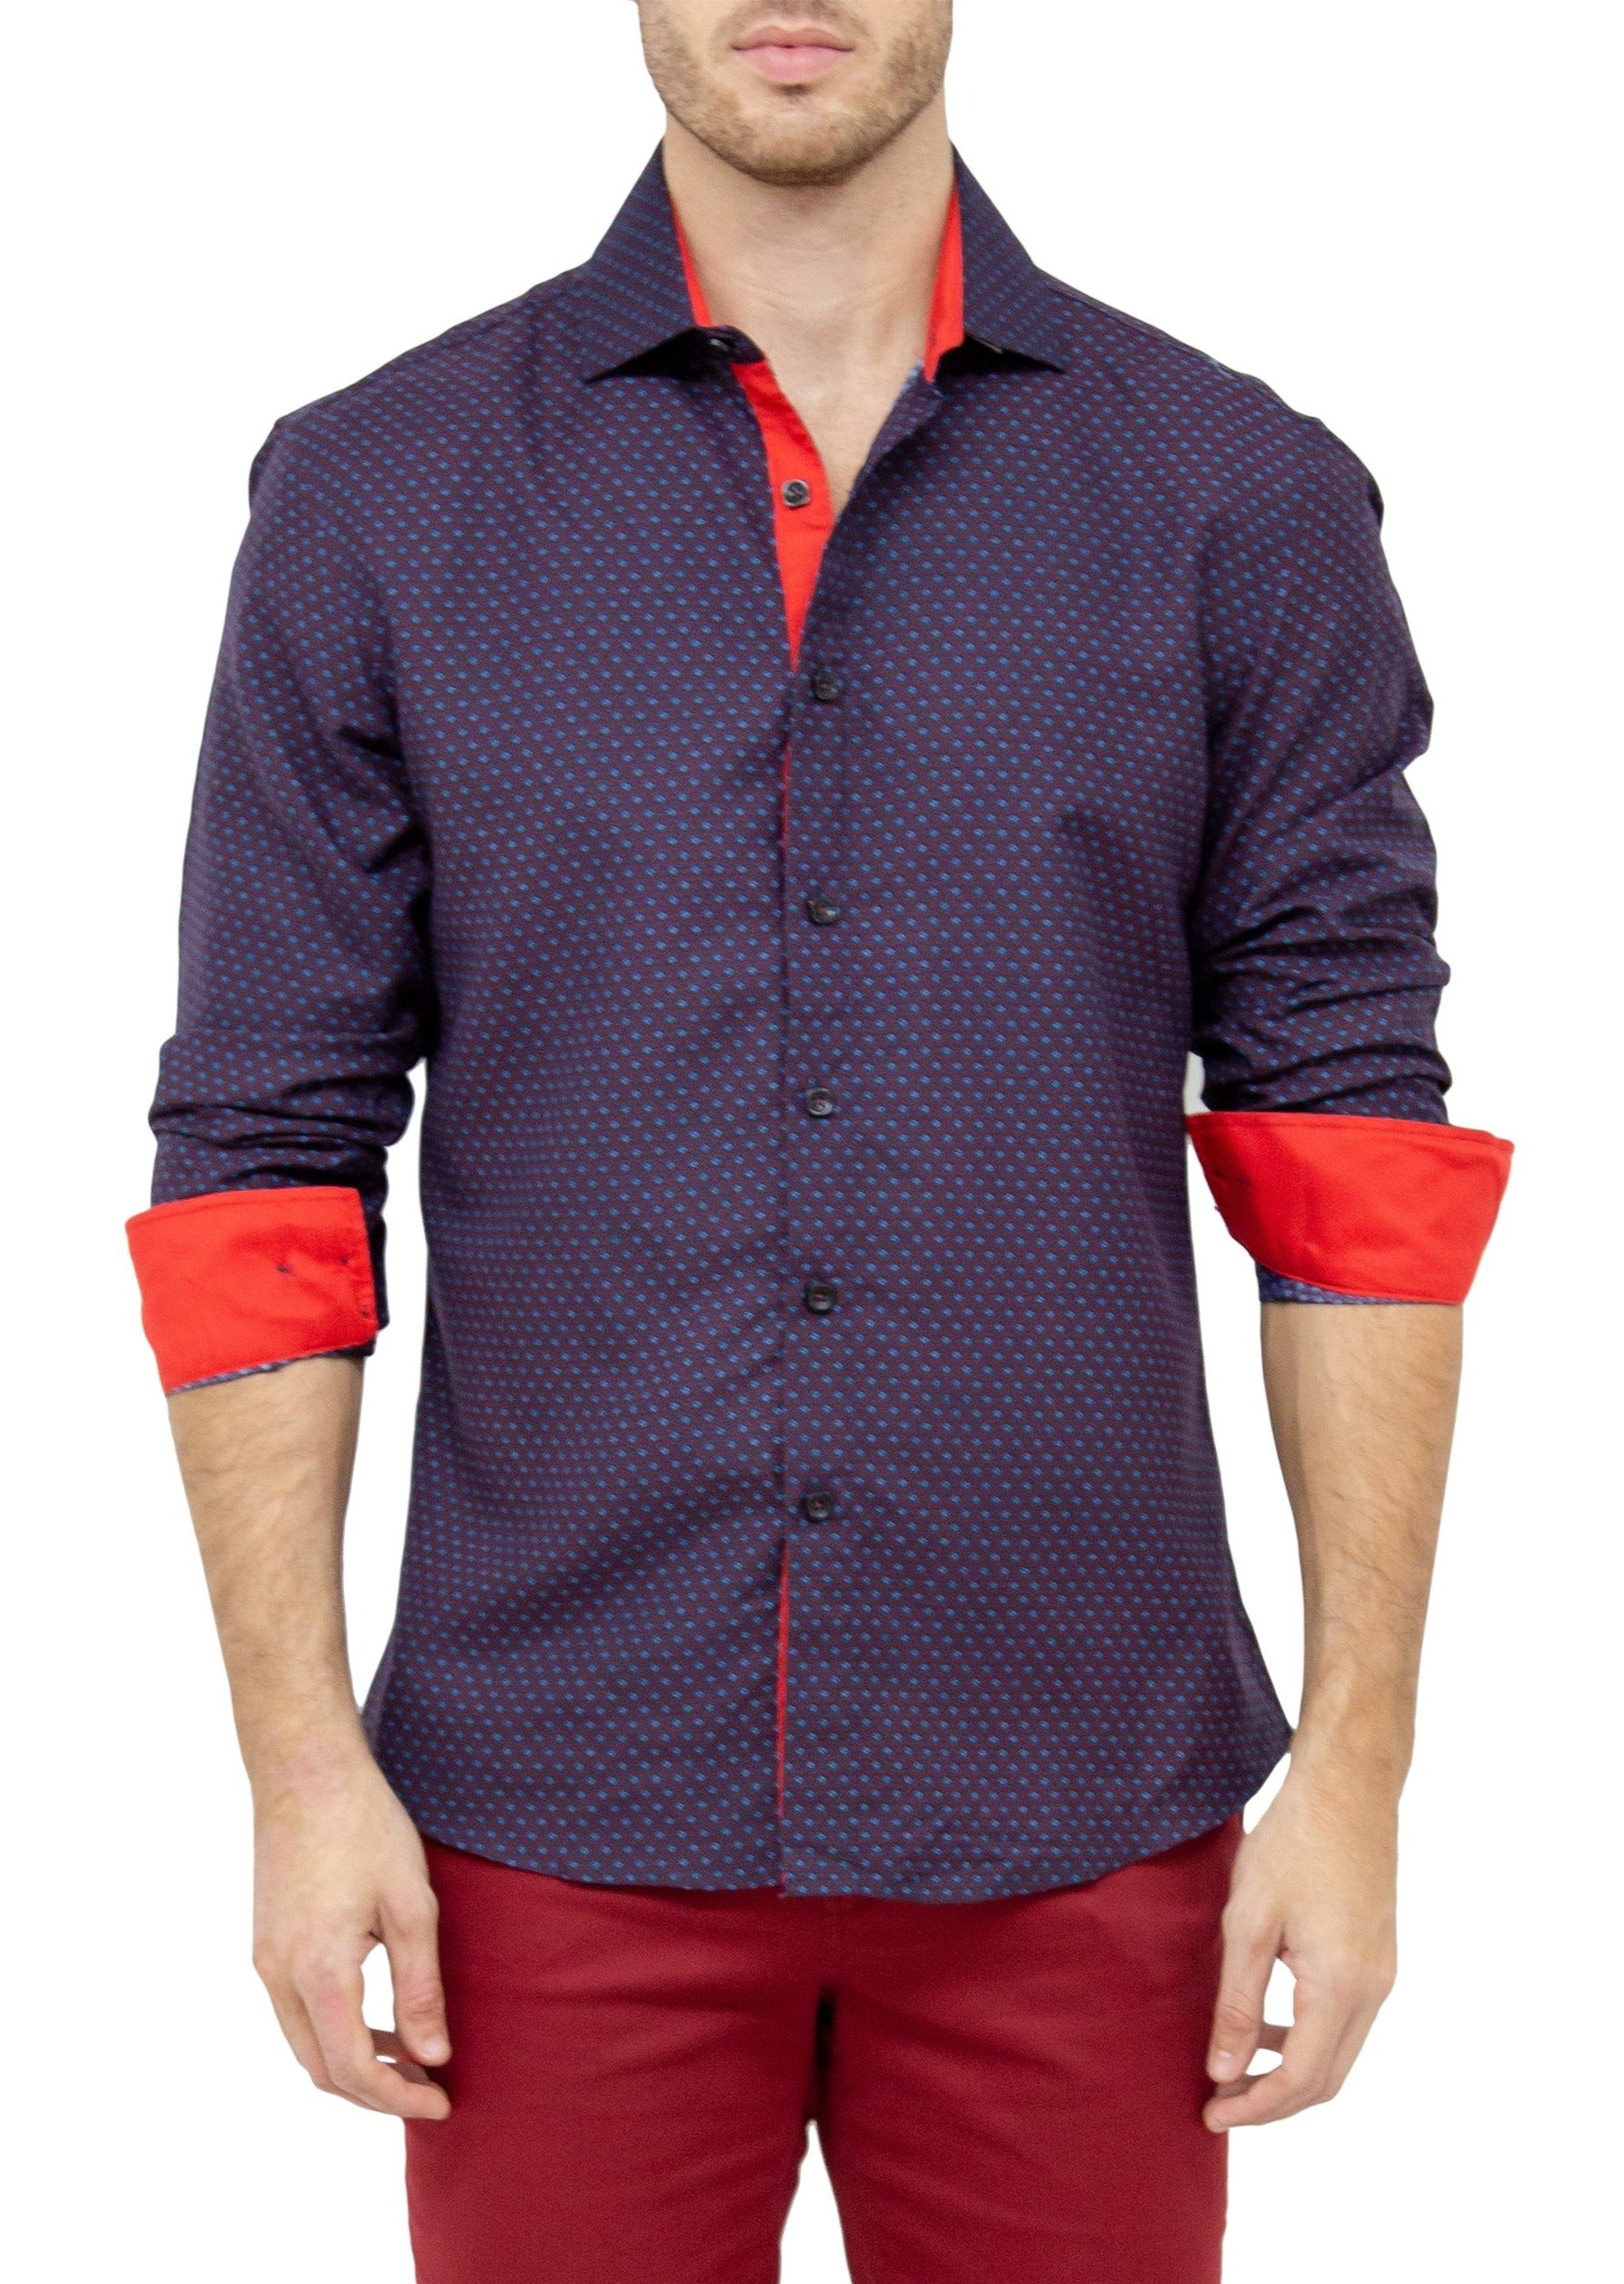 bc-182392-red-button-up-long-sleeve-dress-shirt